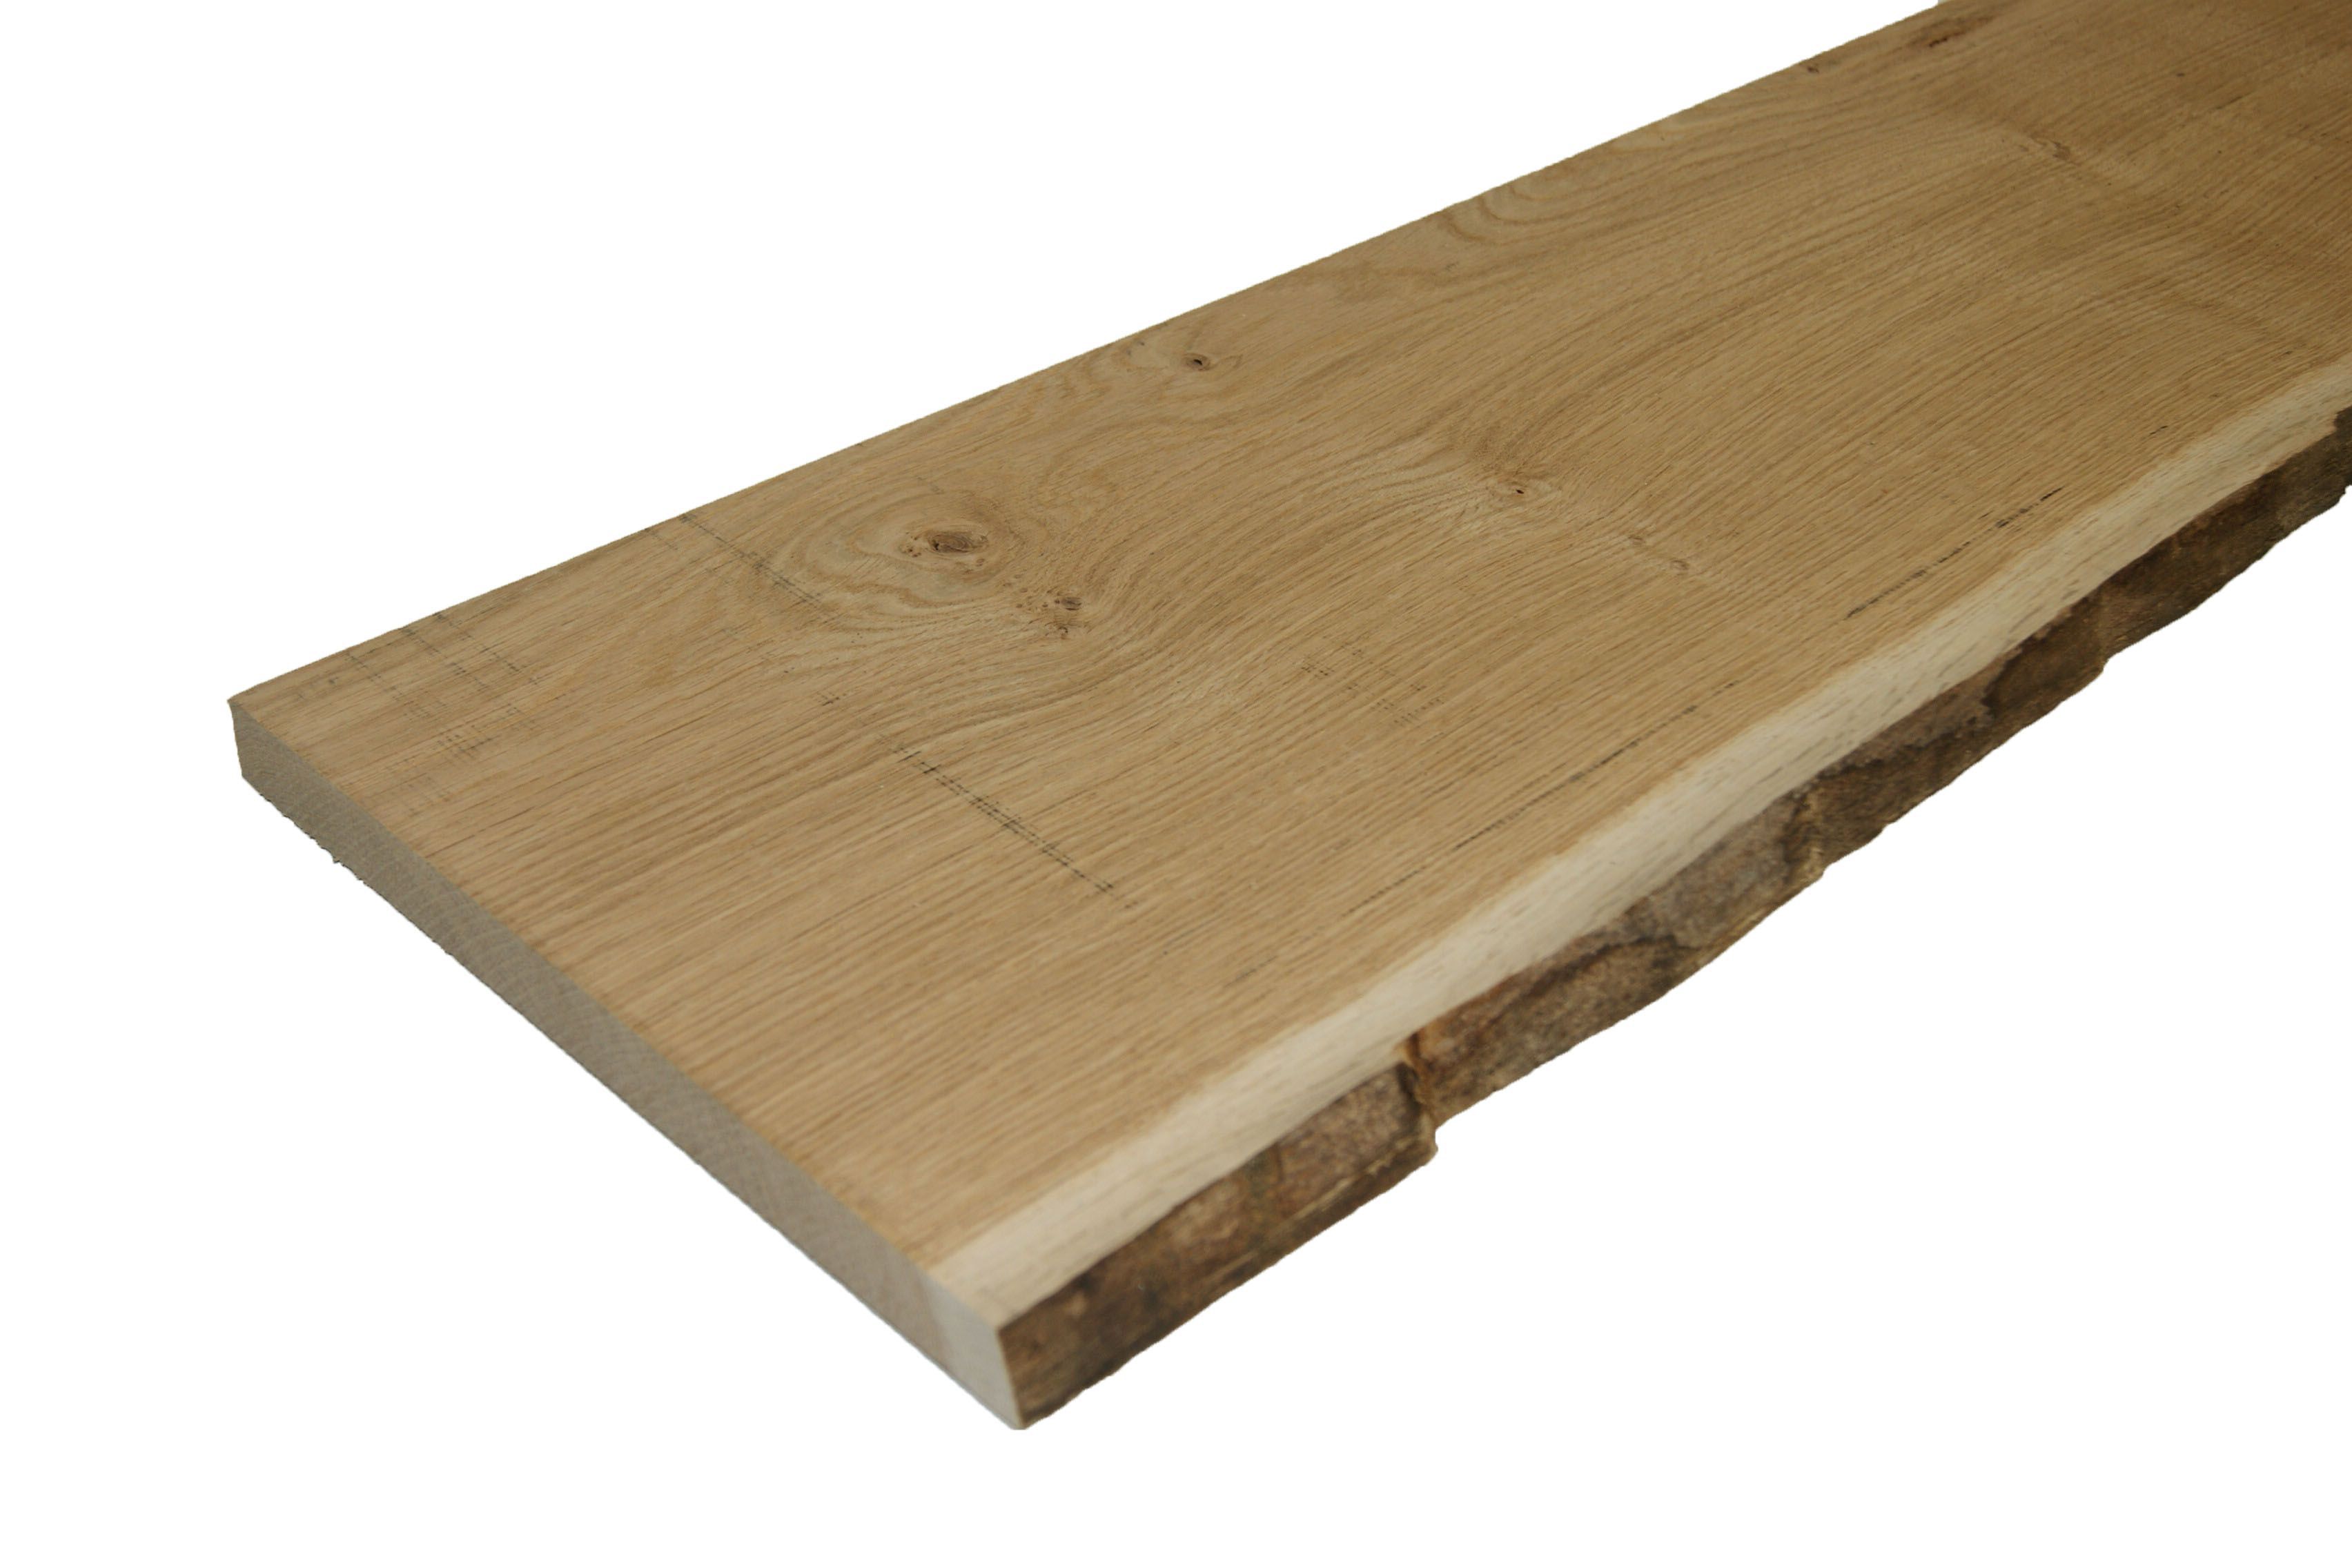 oak-waney-edge-furniture-board-l-1800mm-w-300mm-t-25mm-departments